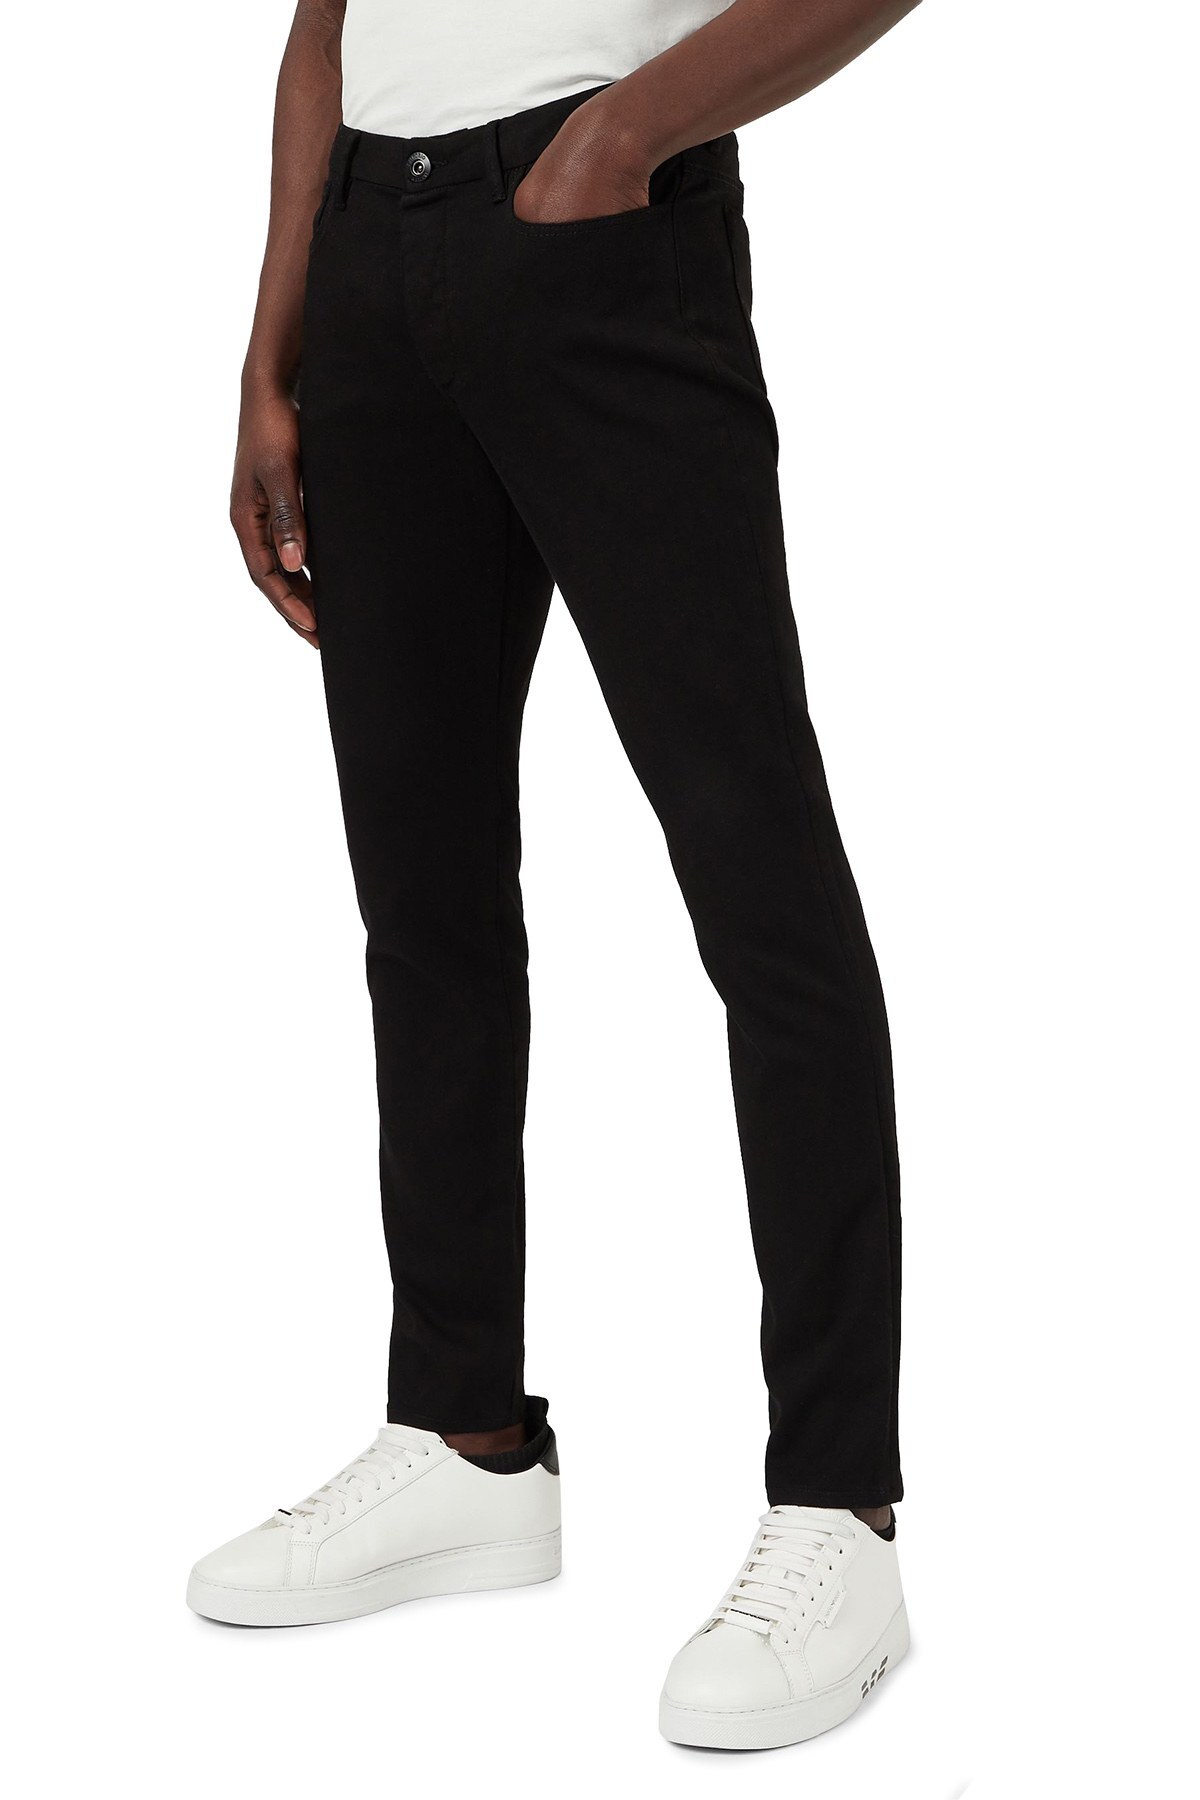 Emporio Armani Düşük Bel Extra Slim Fit J11 Jeans Erkek Kot Pantolon 3K1J11 1DHDZ 0005 SİYAH